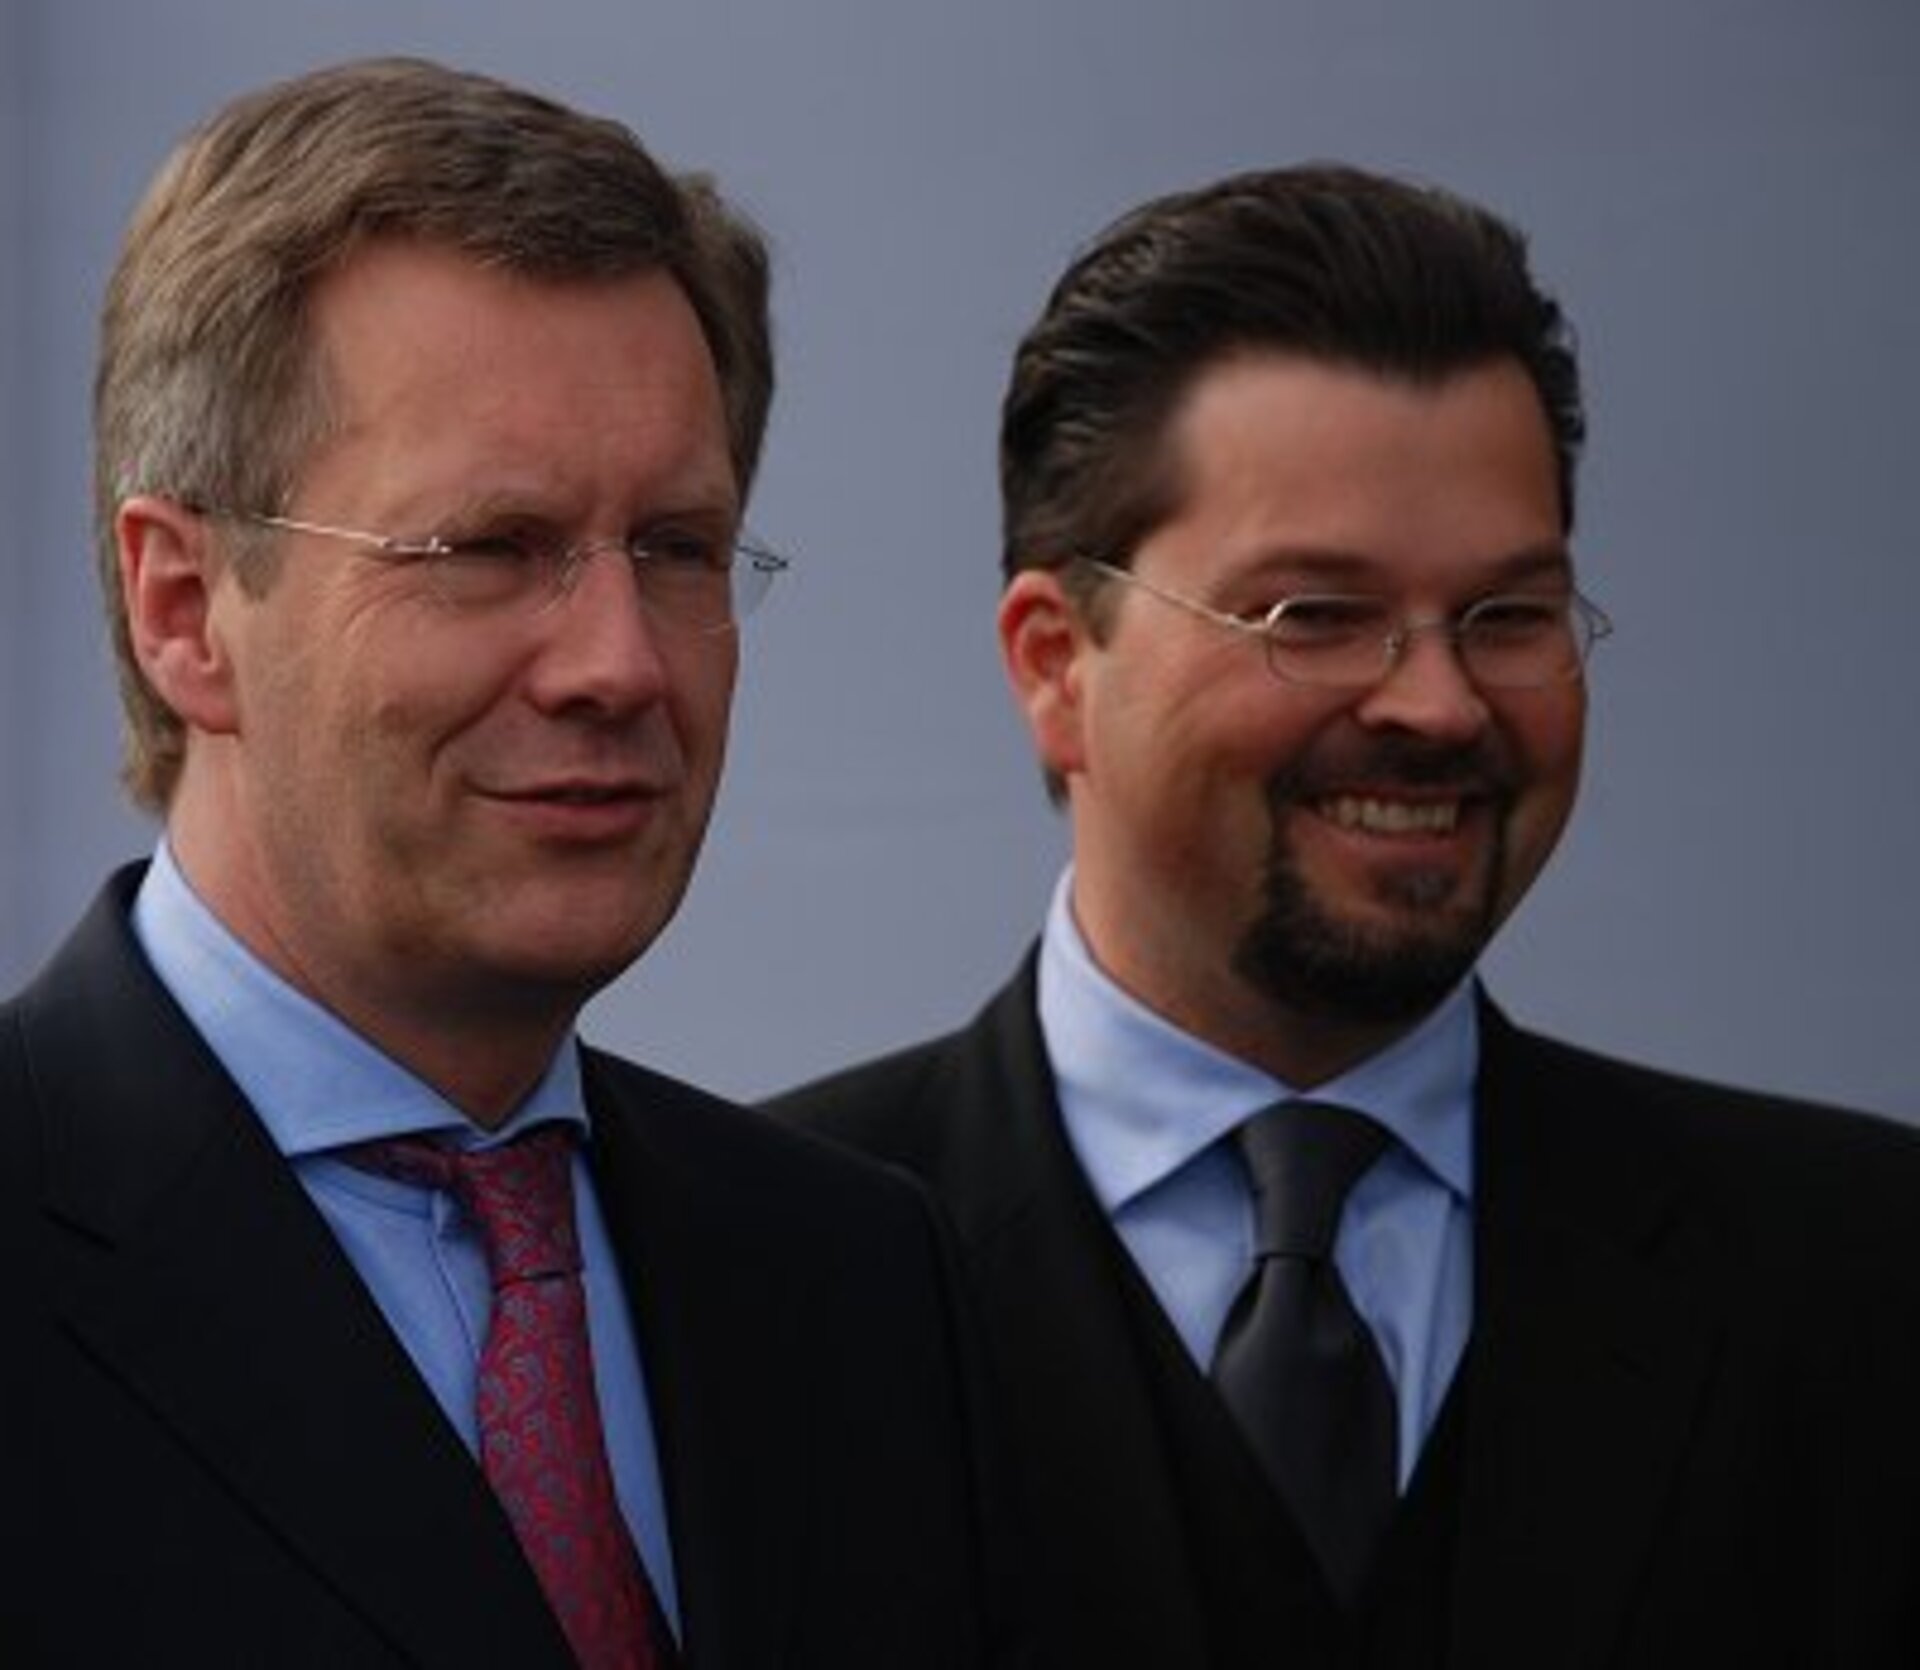 Christian Wulff and Frank M. Salzgeber